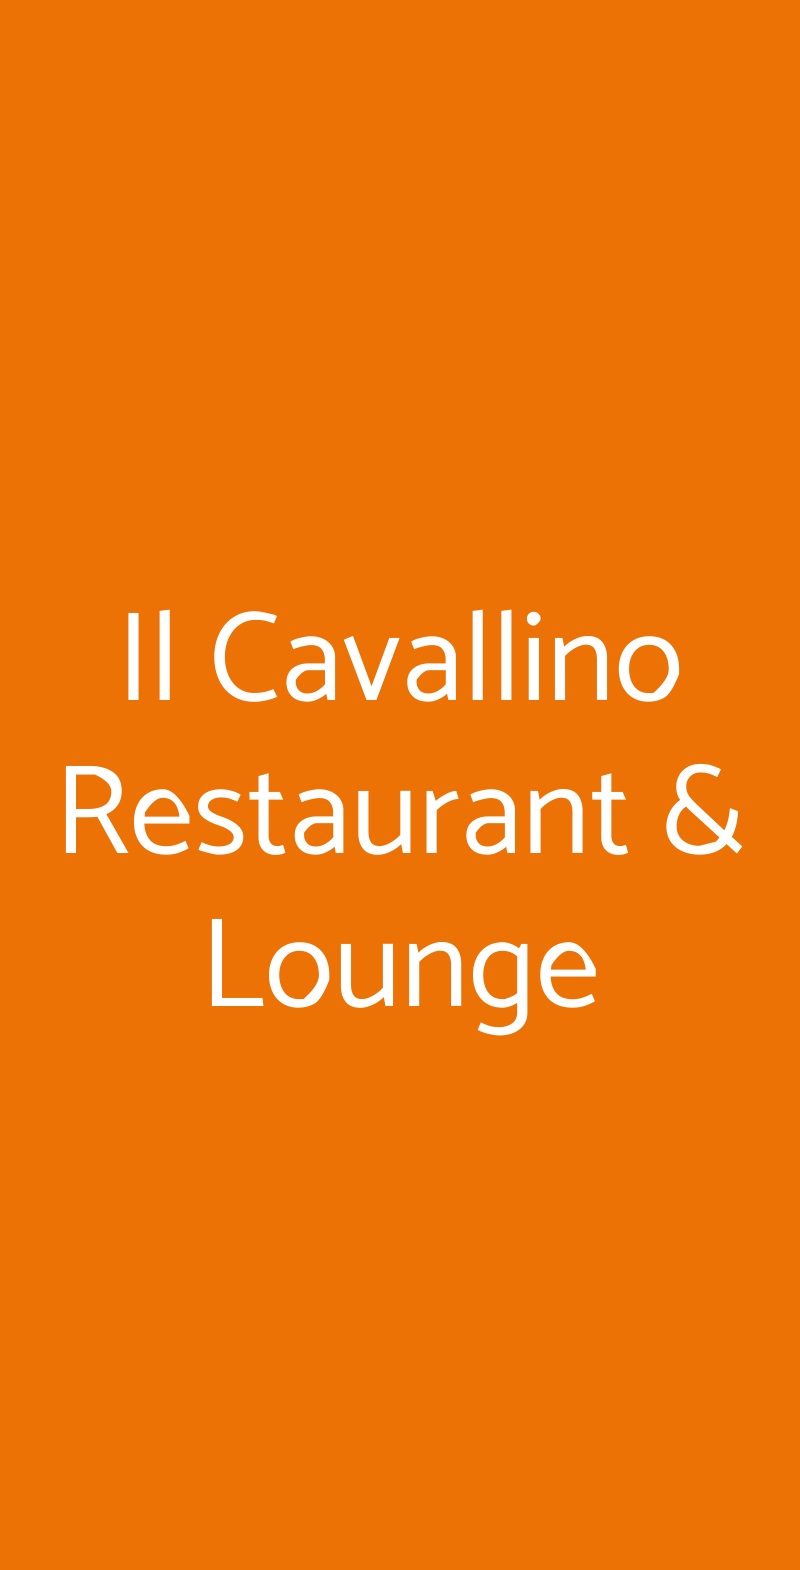 Il Cavallino Restaurant & Lounge Gorga menù 1 pagina